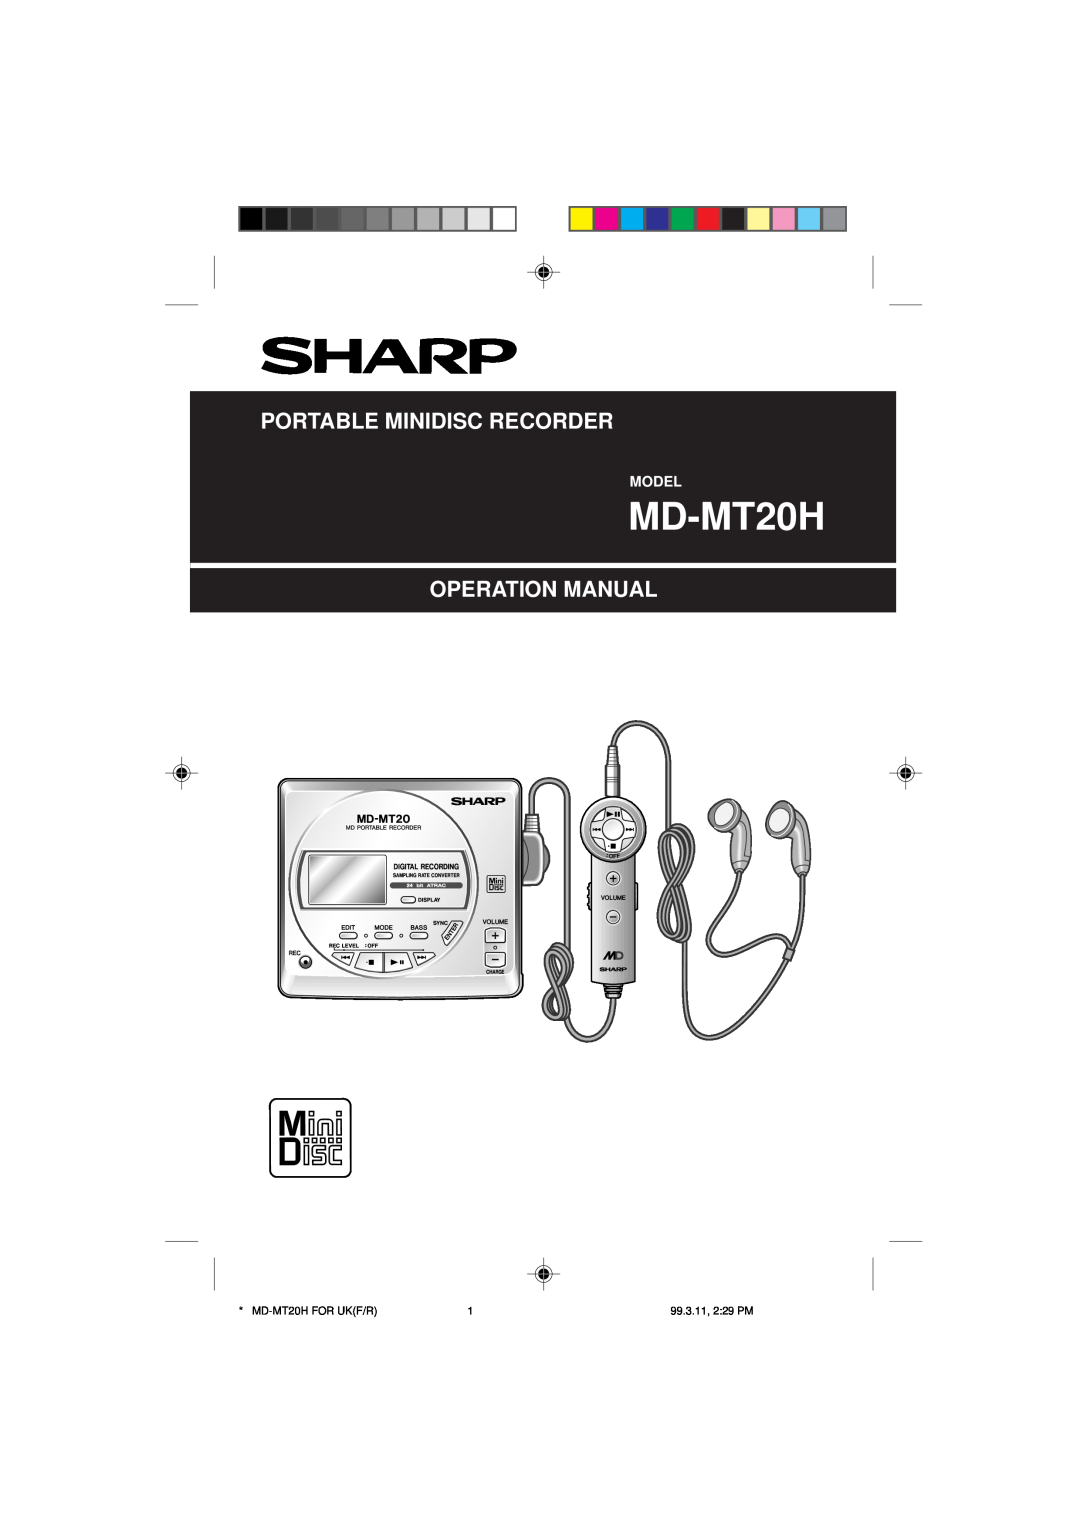 Sharp MD-MT20H operation manual Portable Minidisc Recorder, Model 